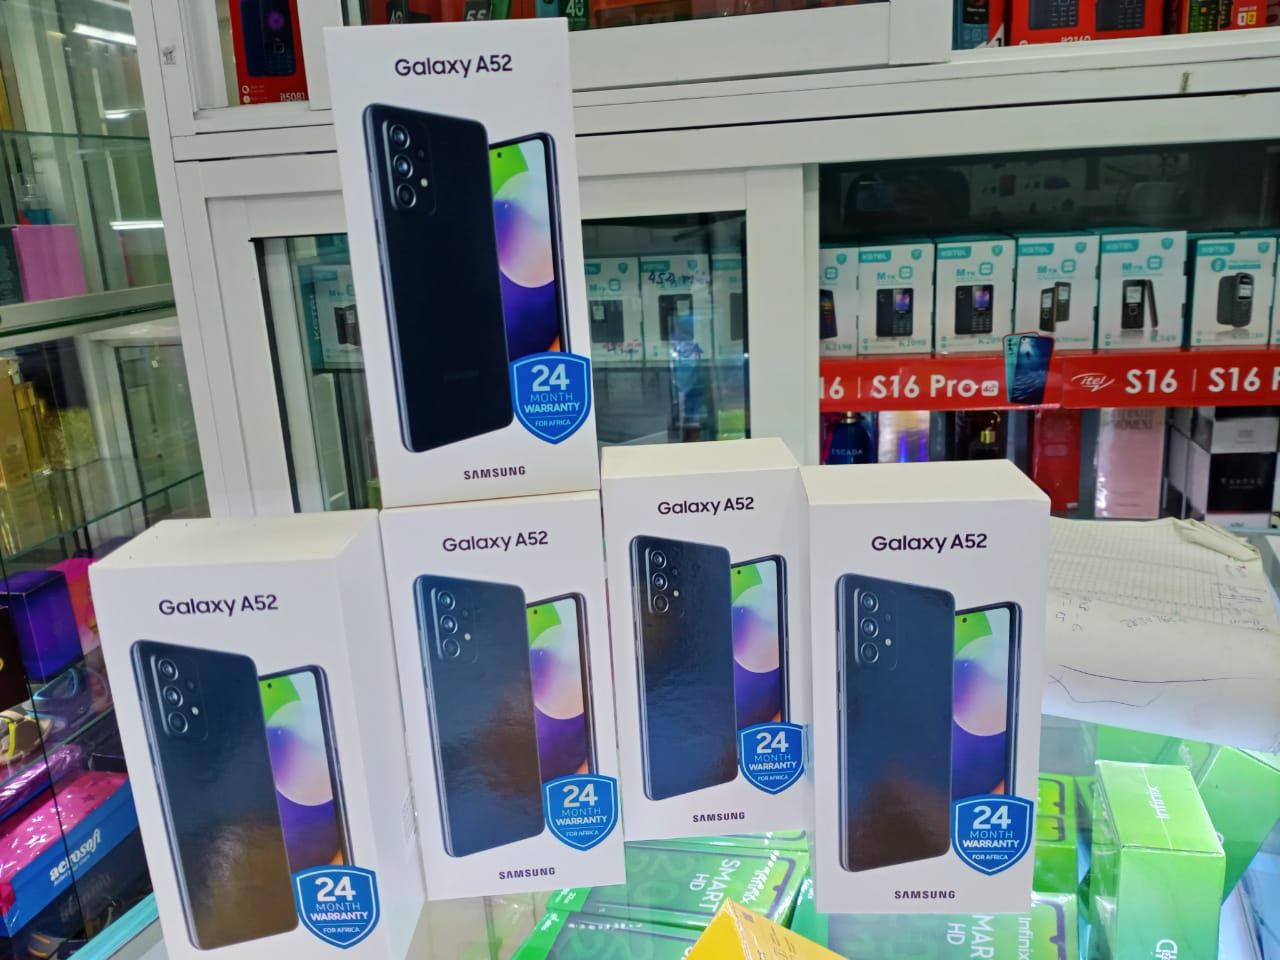 Samsung Phones and prices in Kenya